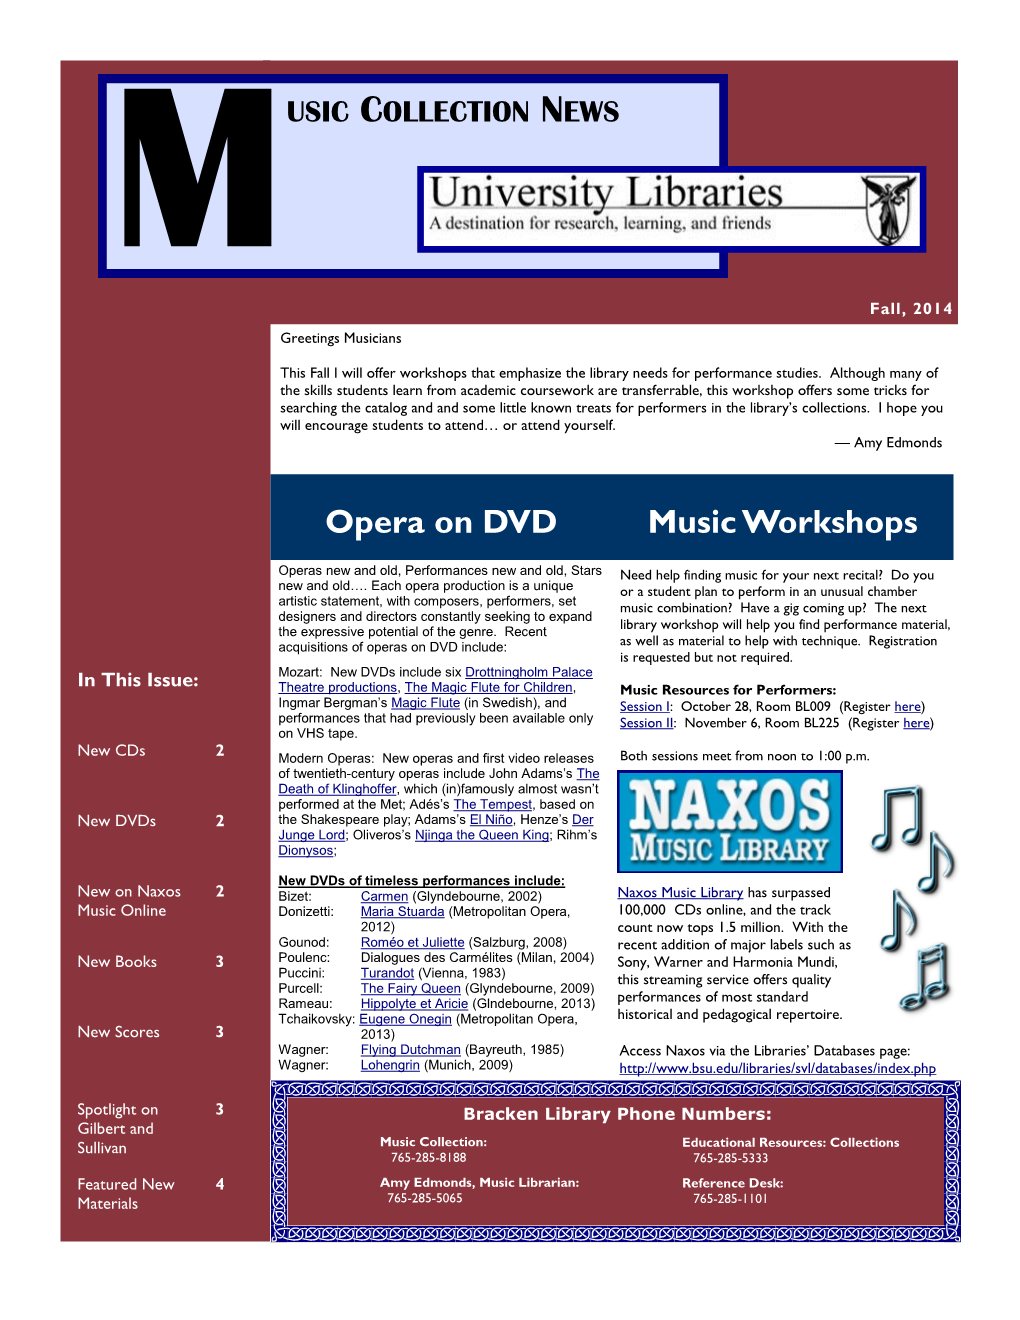 Opera on DVD Music Workshops